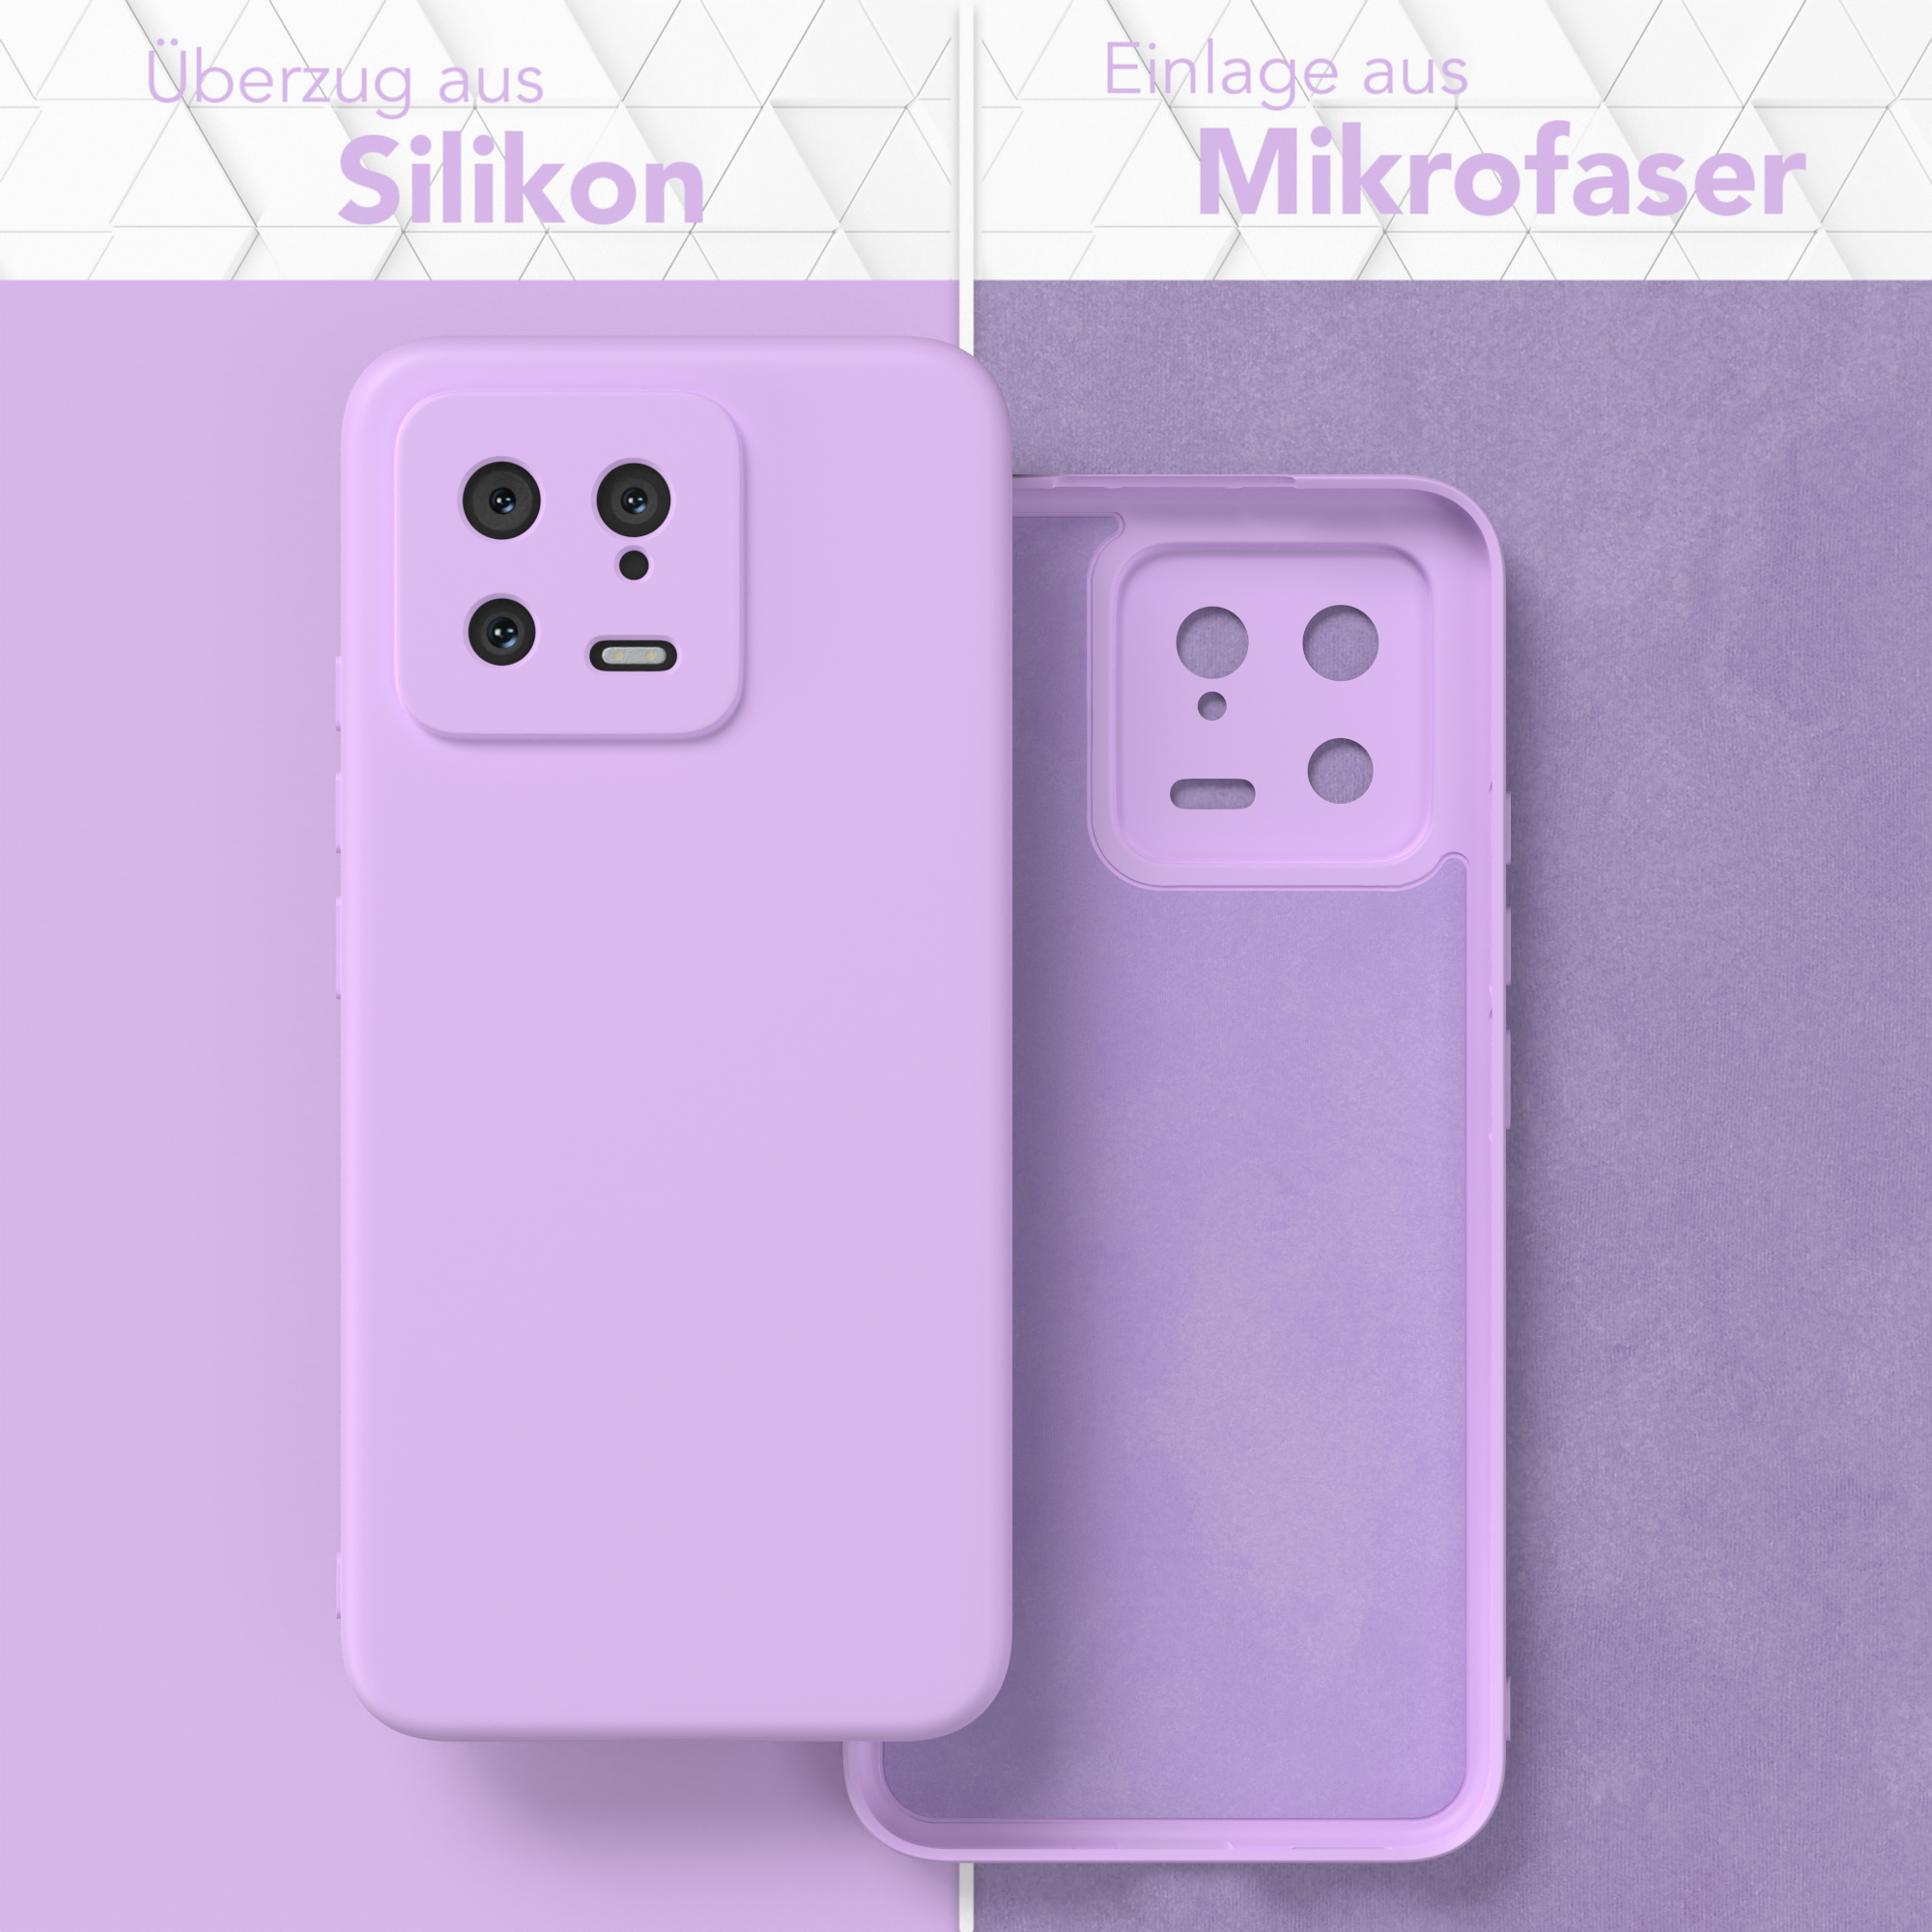 EAZY CASE TPU Xiaomi, Backcover, Lavendel Matt, 13, Lila Handycase Silikon